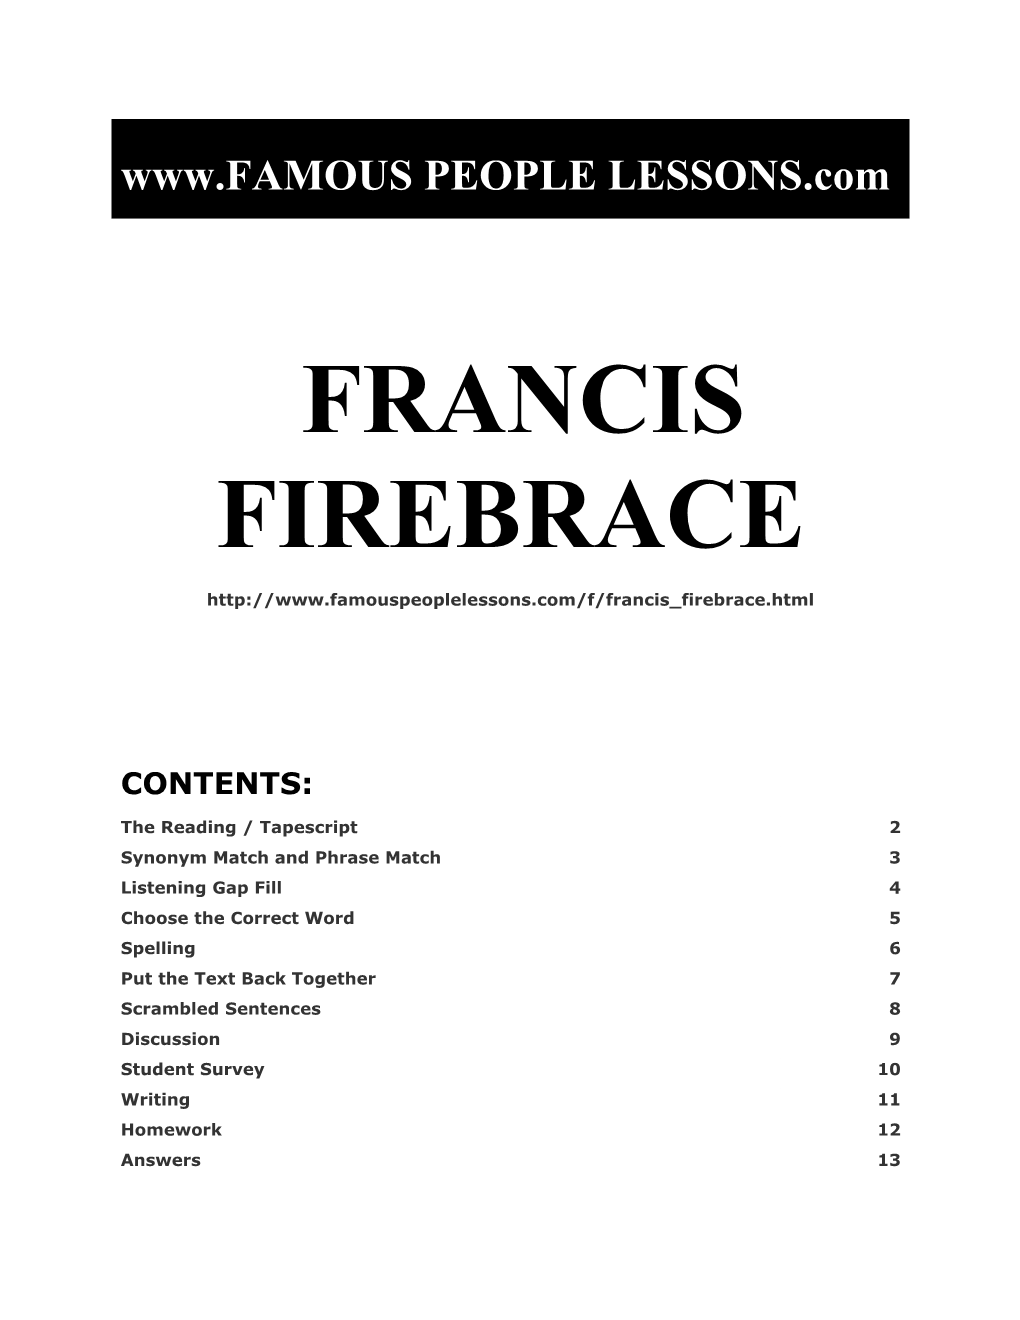 Famous People Lessons - Francis Firebrace